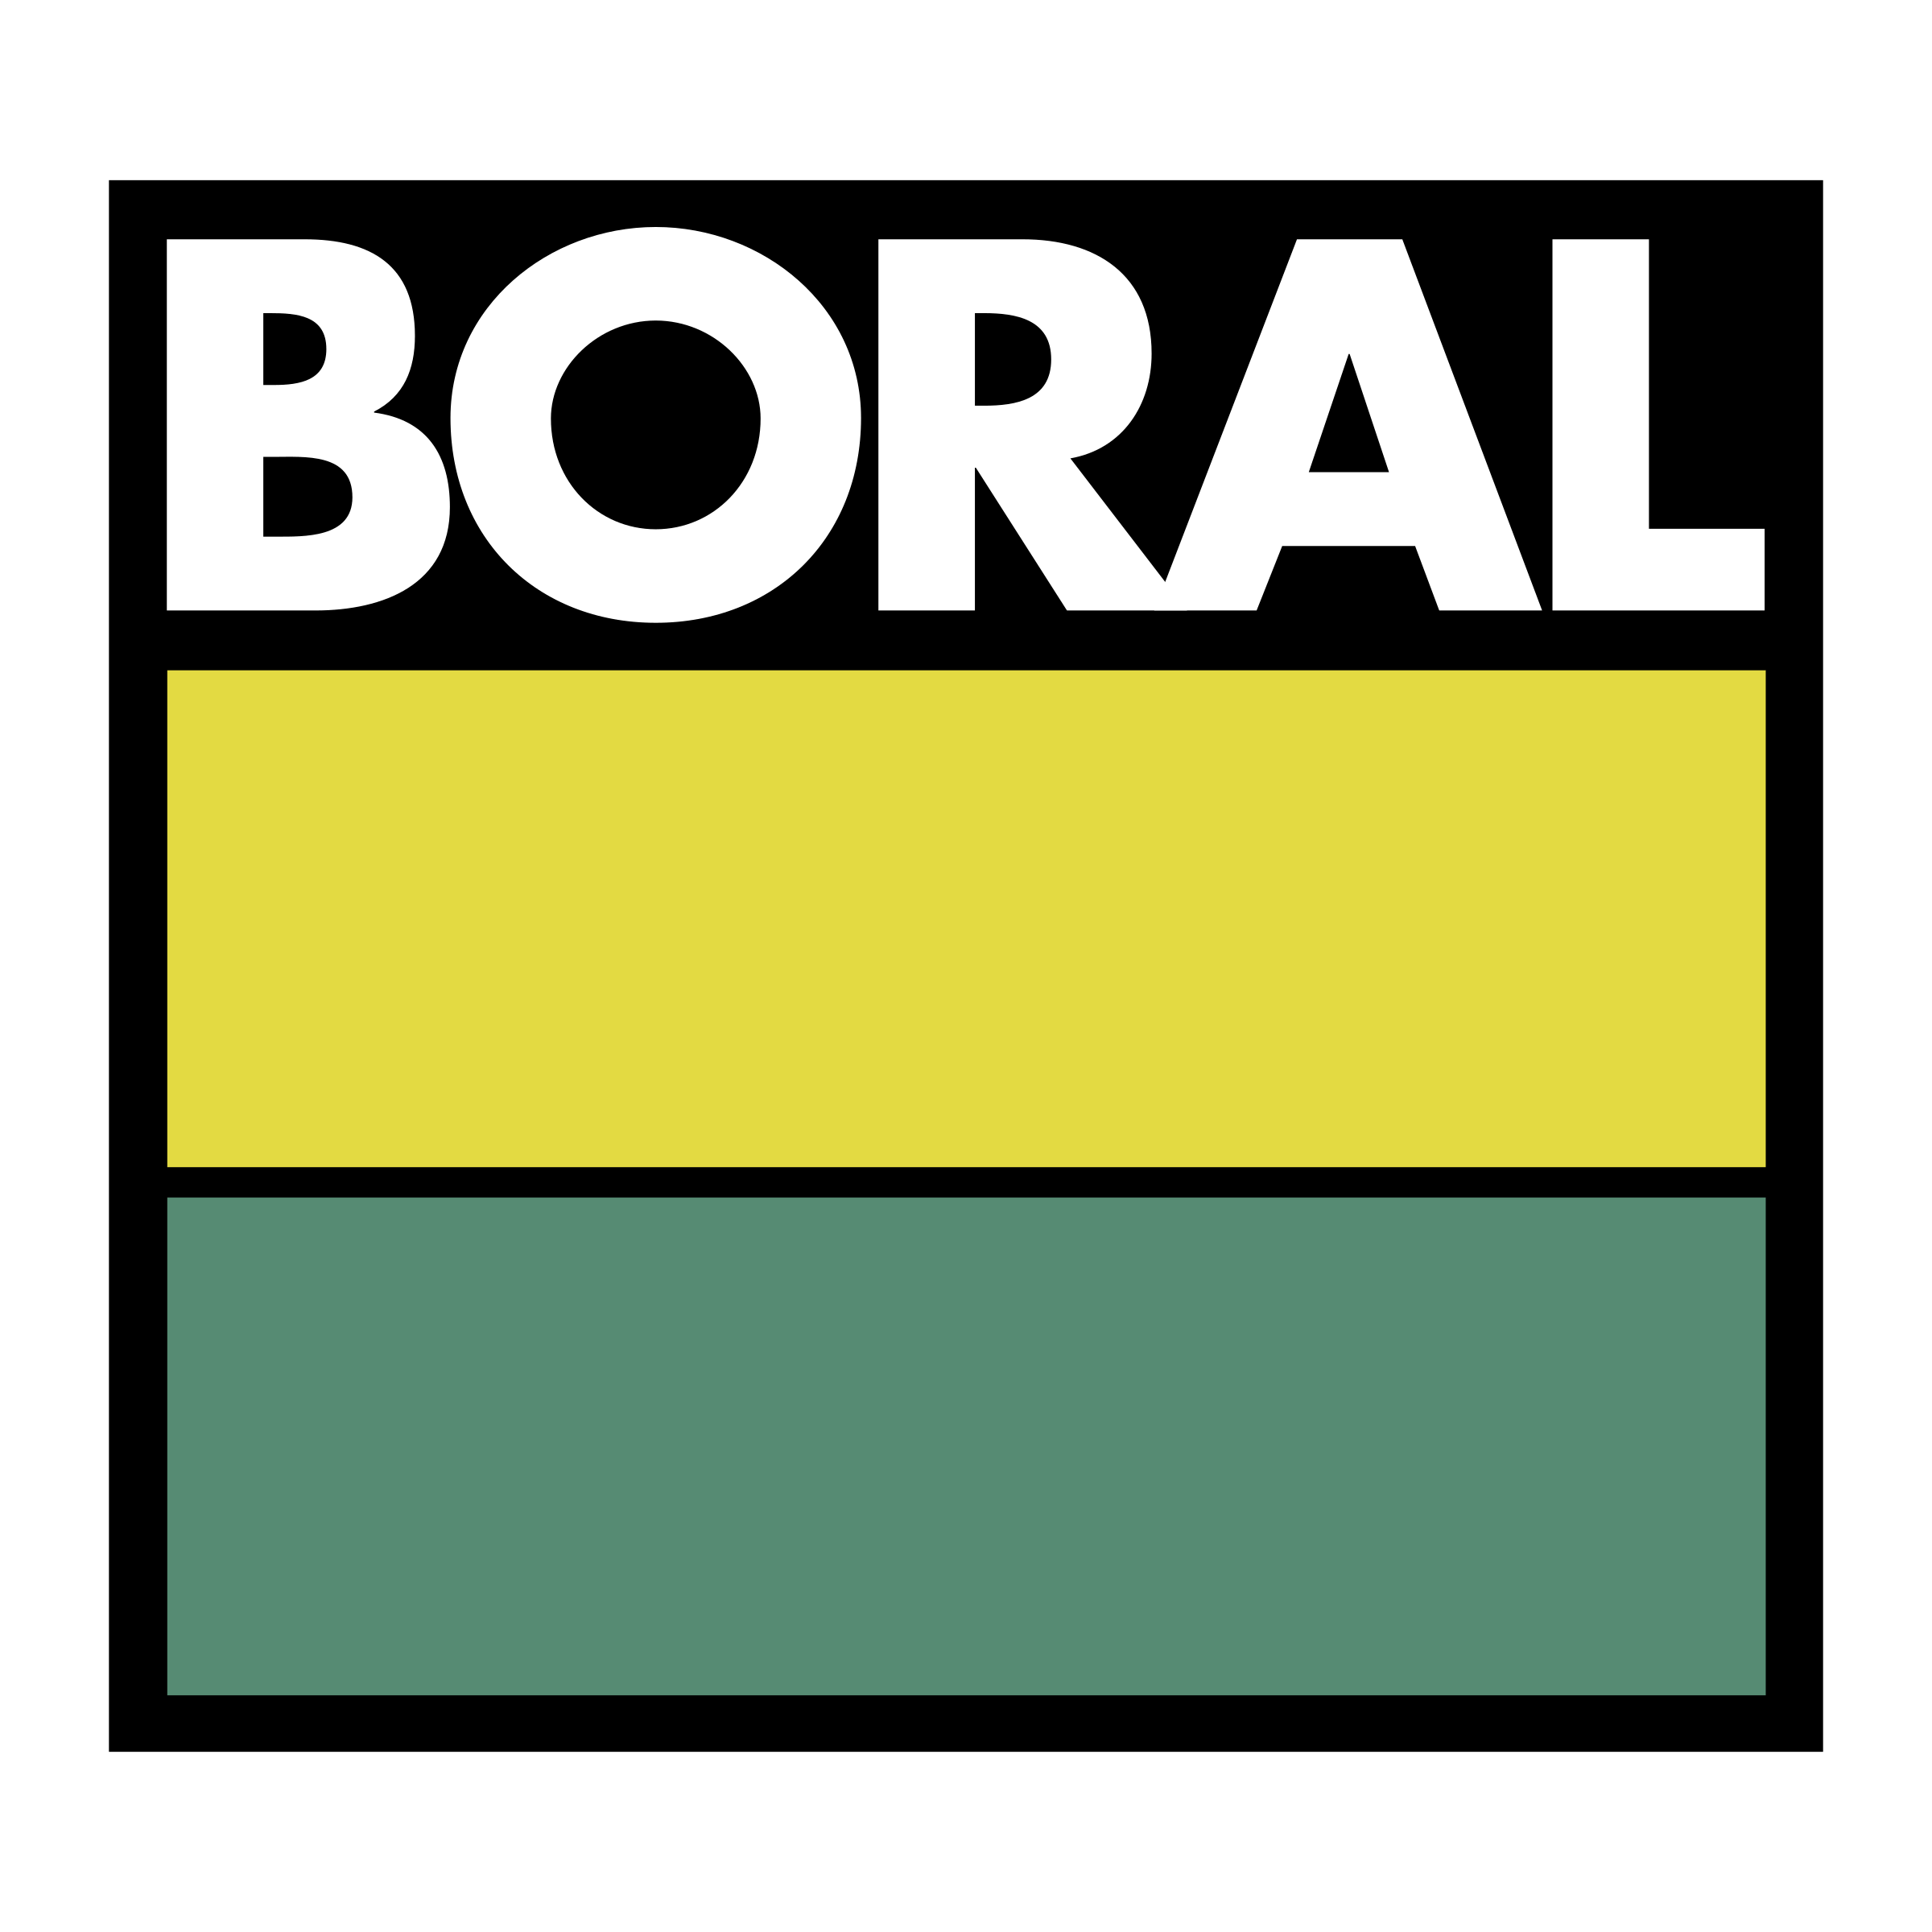 Boral Logo - Boral Logo PNG Transparent & SVG Vector - Freebie Supply